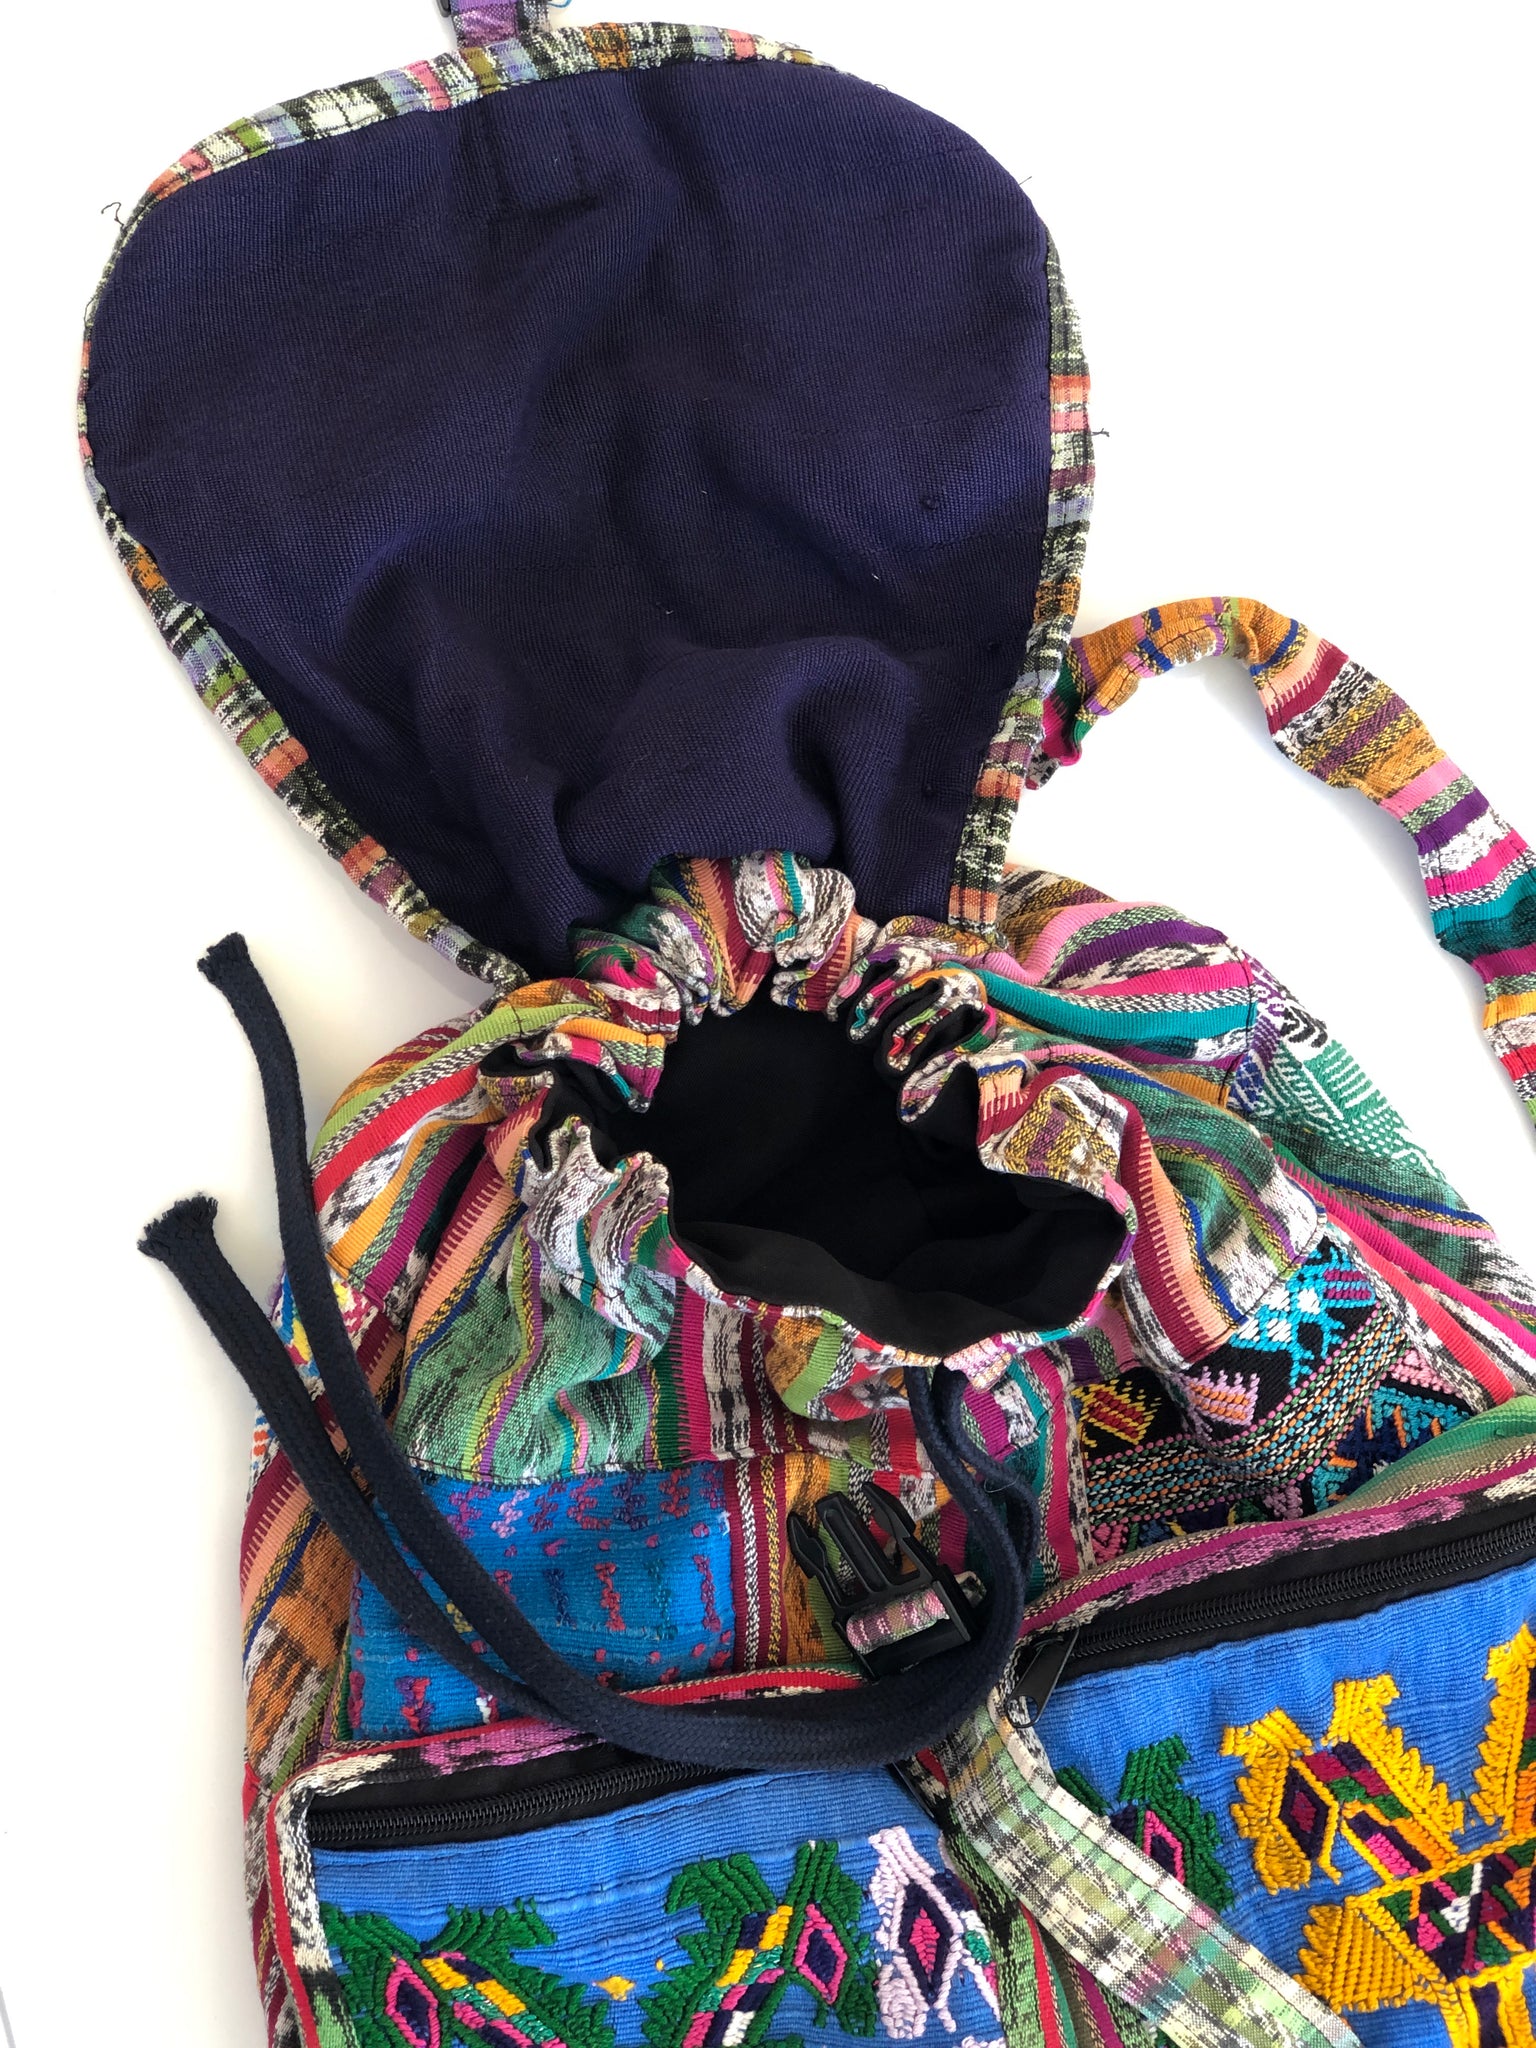 VINTAGE: Woven Guatemalan Backpack